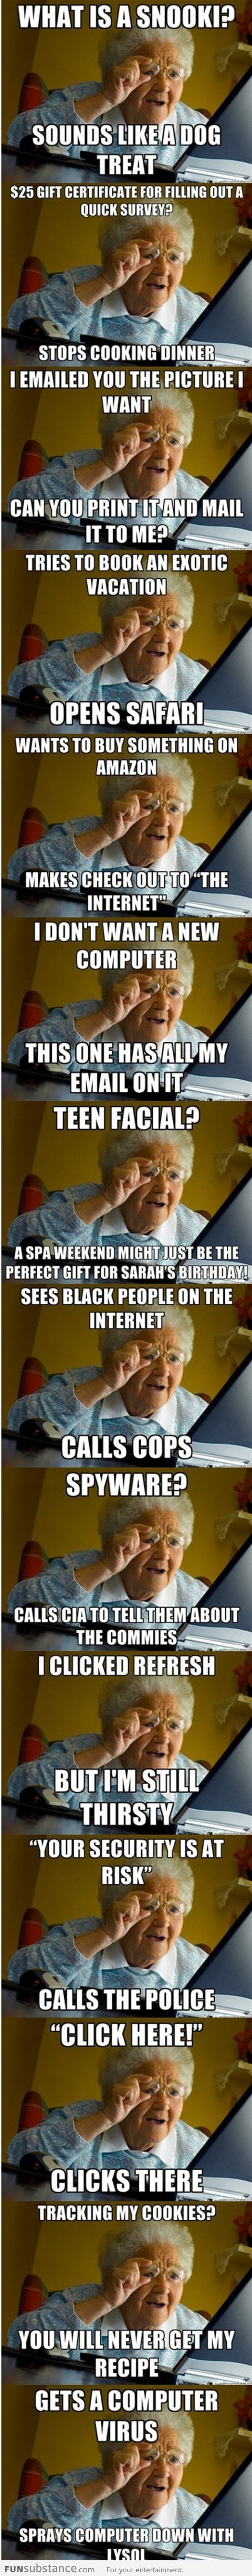 Internet Grandma Surprises Compilation